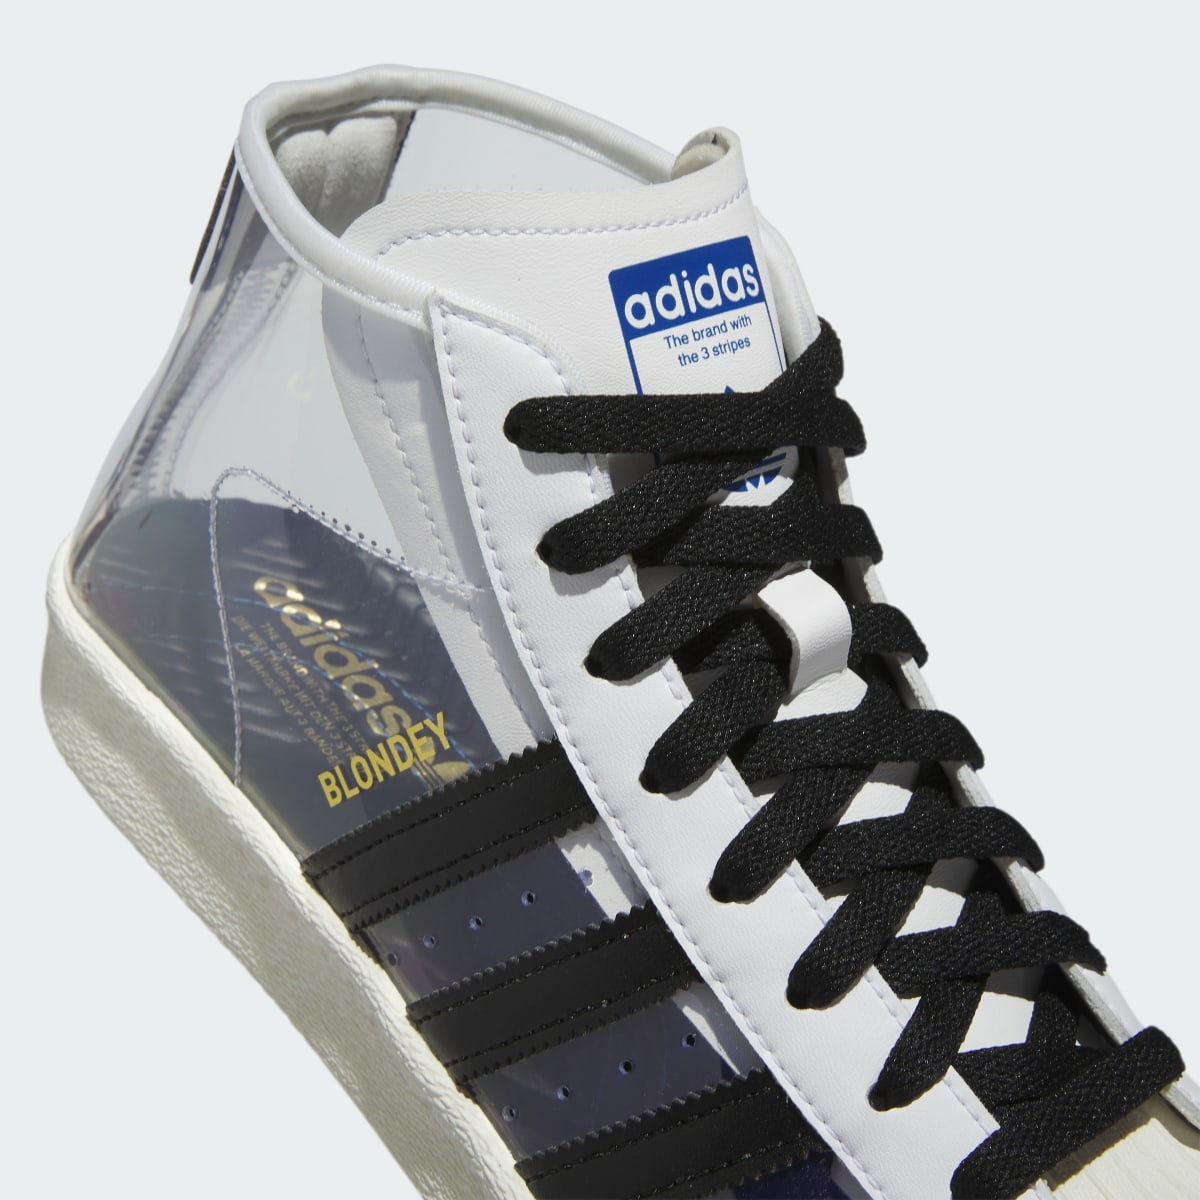 Adidas Blondey Pro Model ADV Ayakkabı. 11